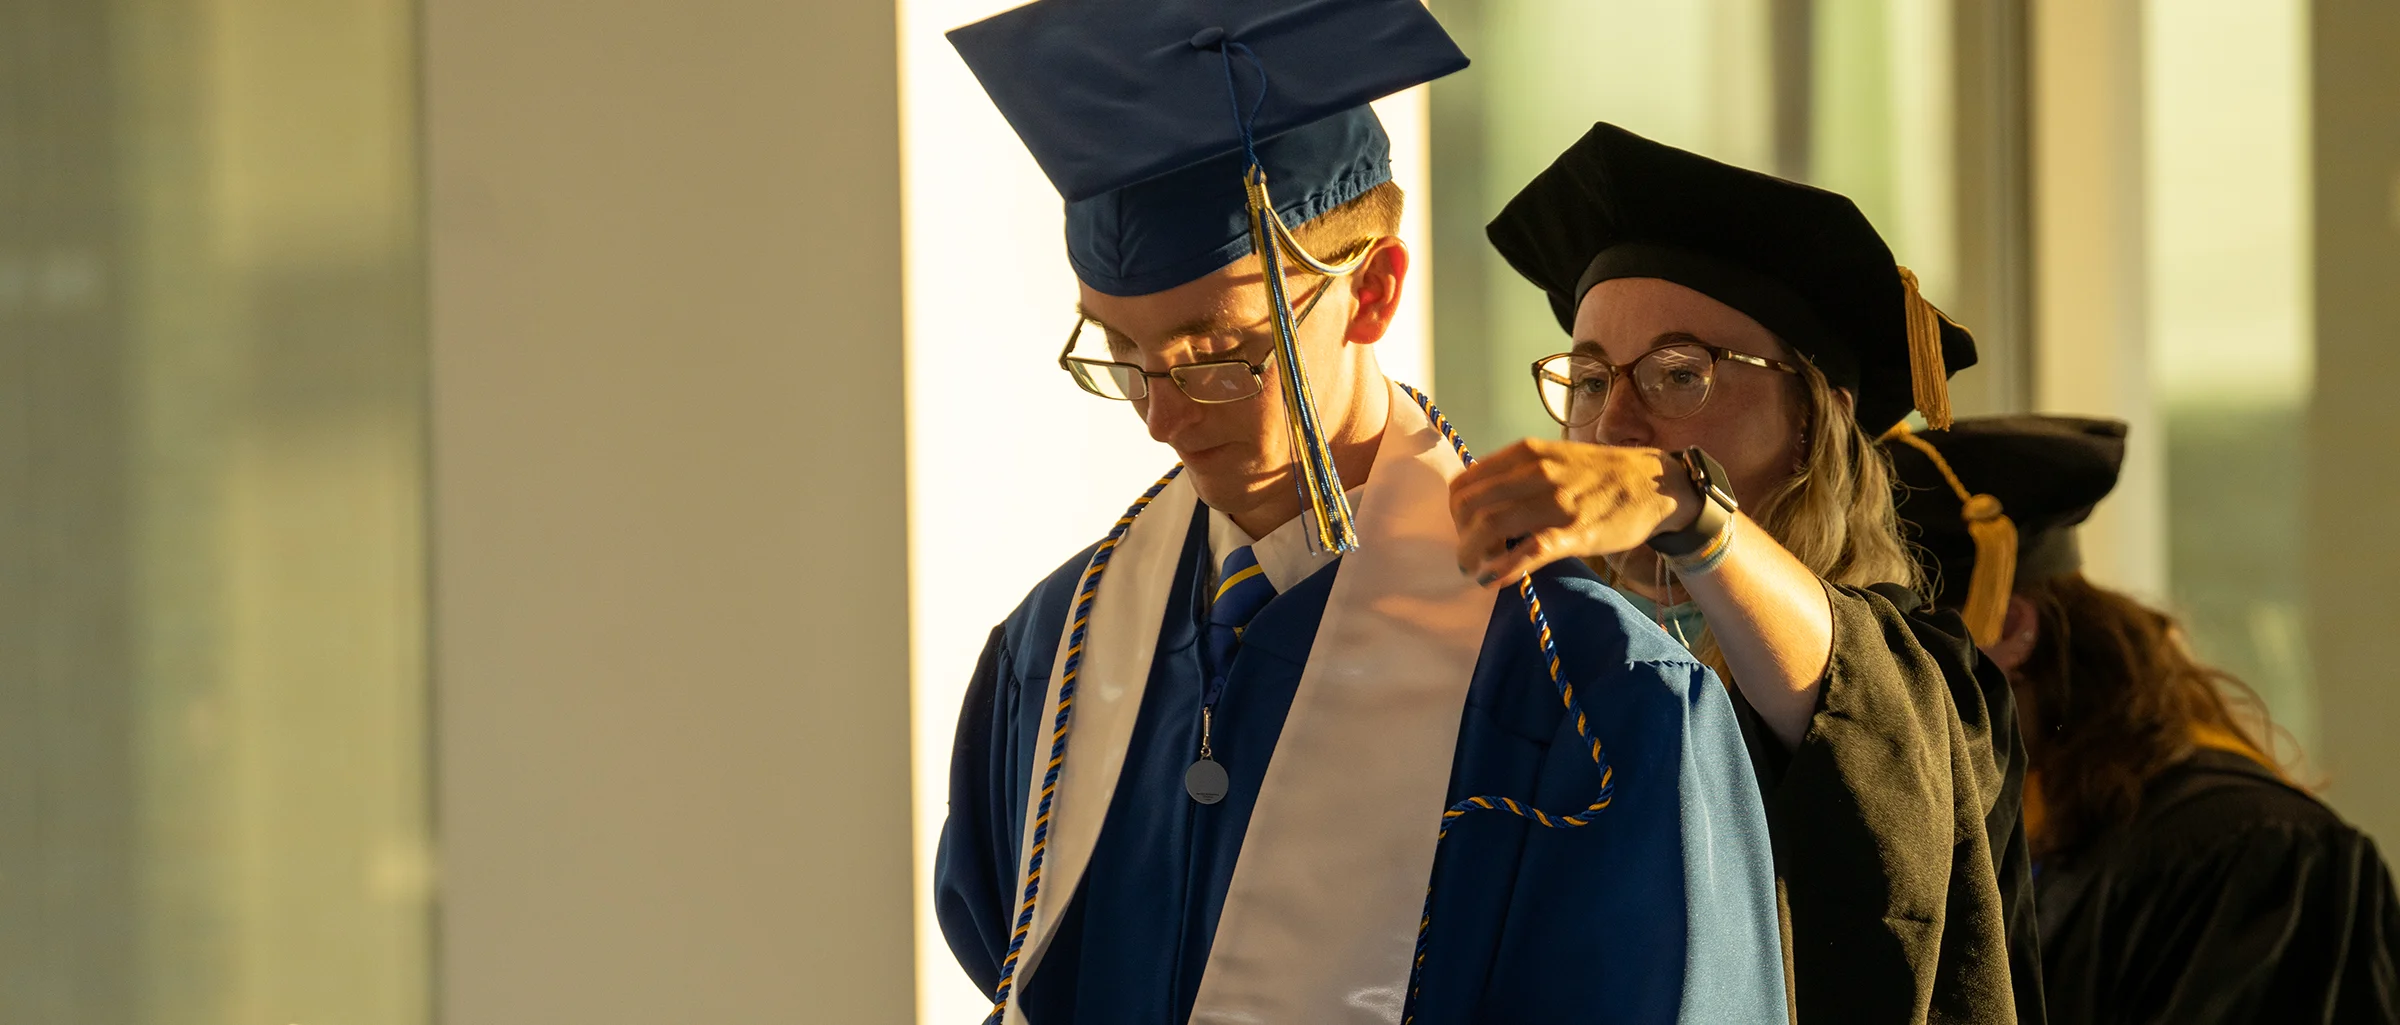 Jayla Godfrey places an honor cord over Zach Simpler's neck over his undergraduate academic regalia